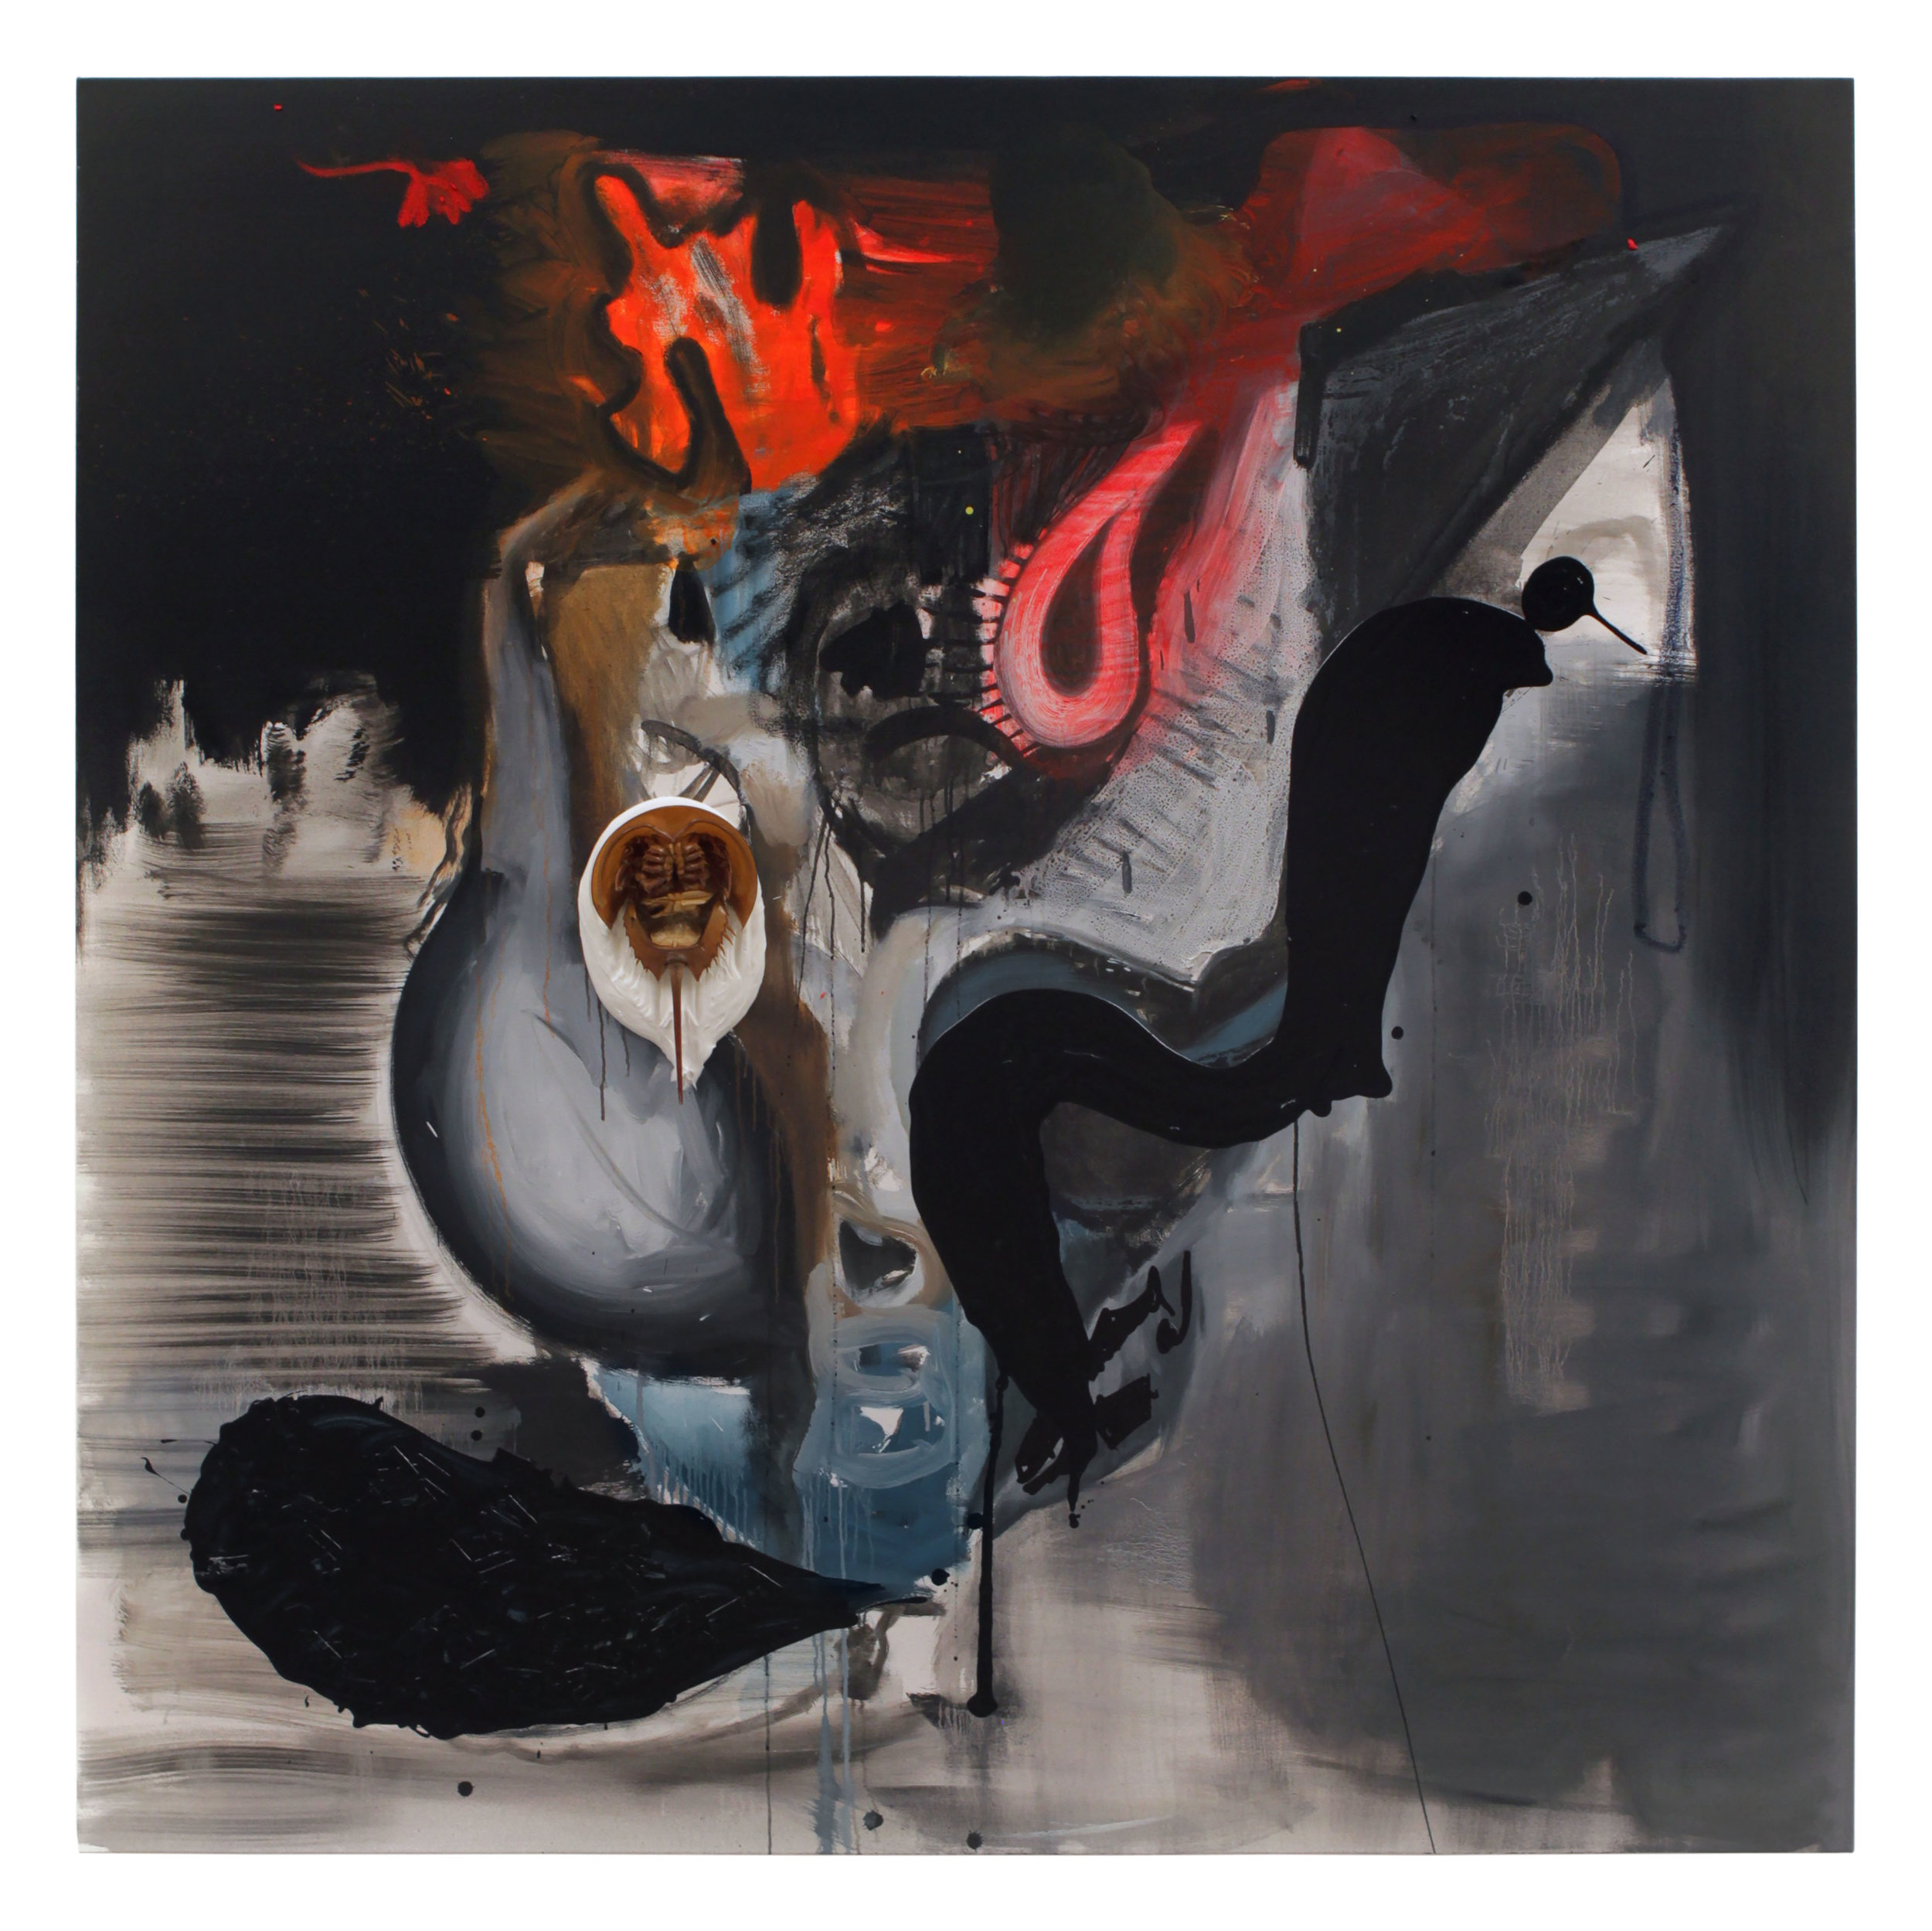  Drew Beattie  Sympathetic Figuration &nbsp; 2013 oil, oil stick, acrylic, razor blades and horseshoe crab on canvas 72 x 72 inches 